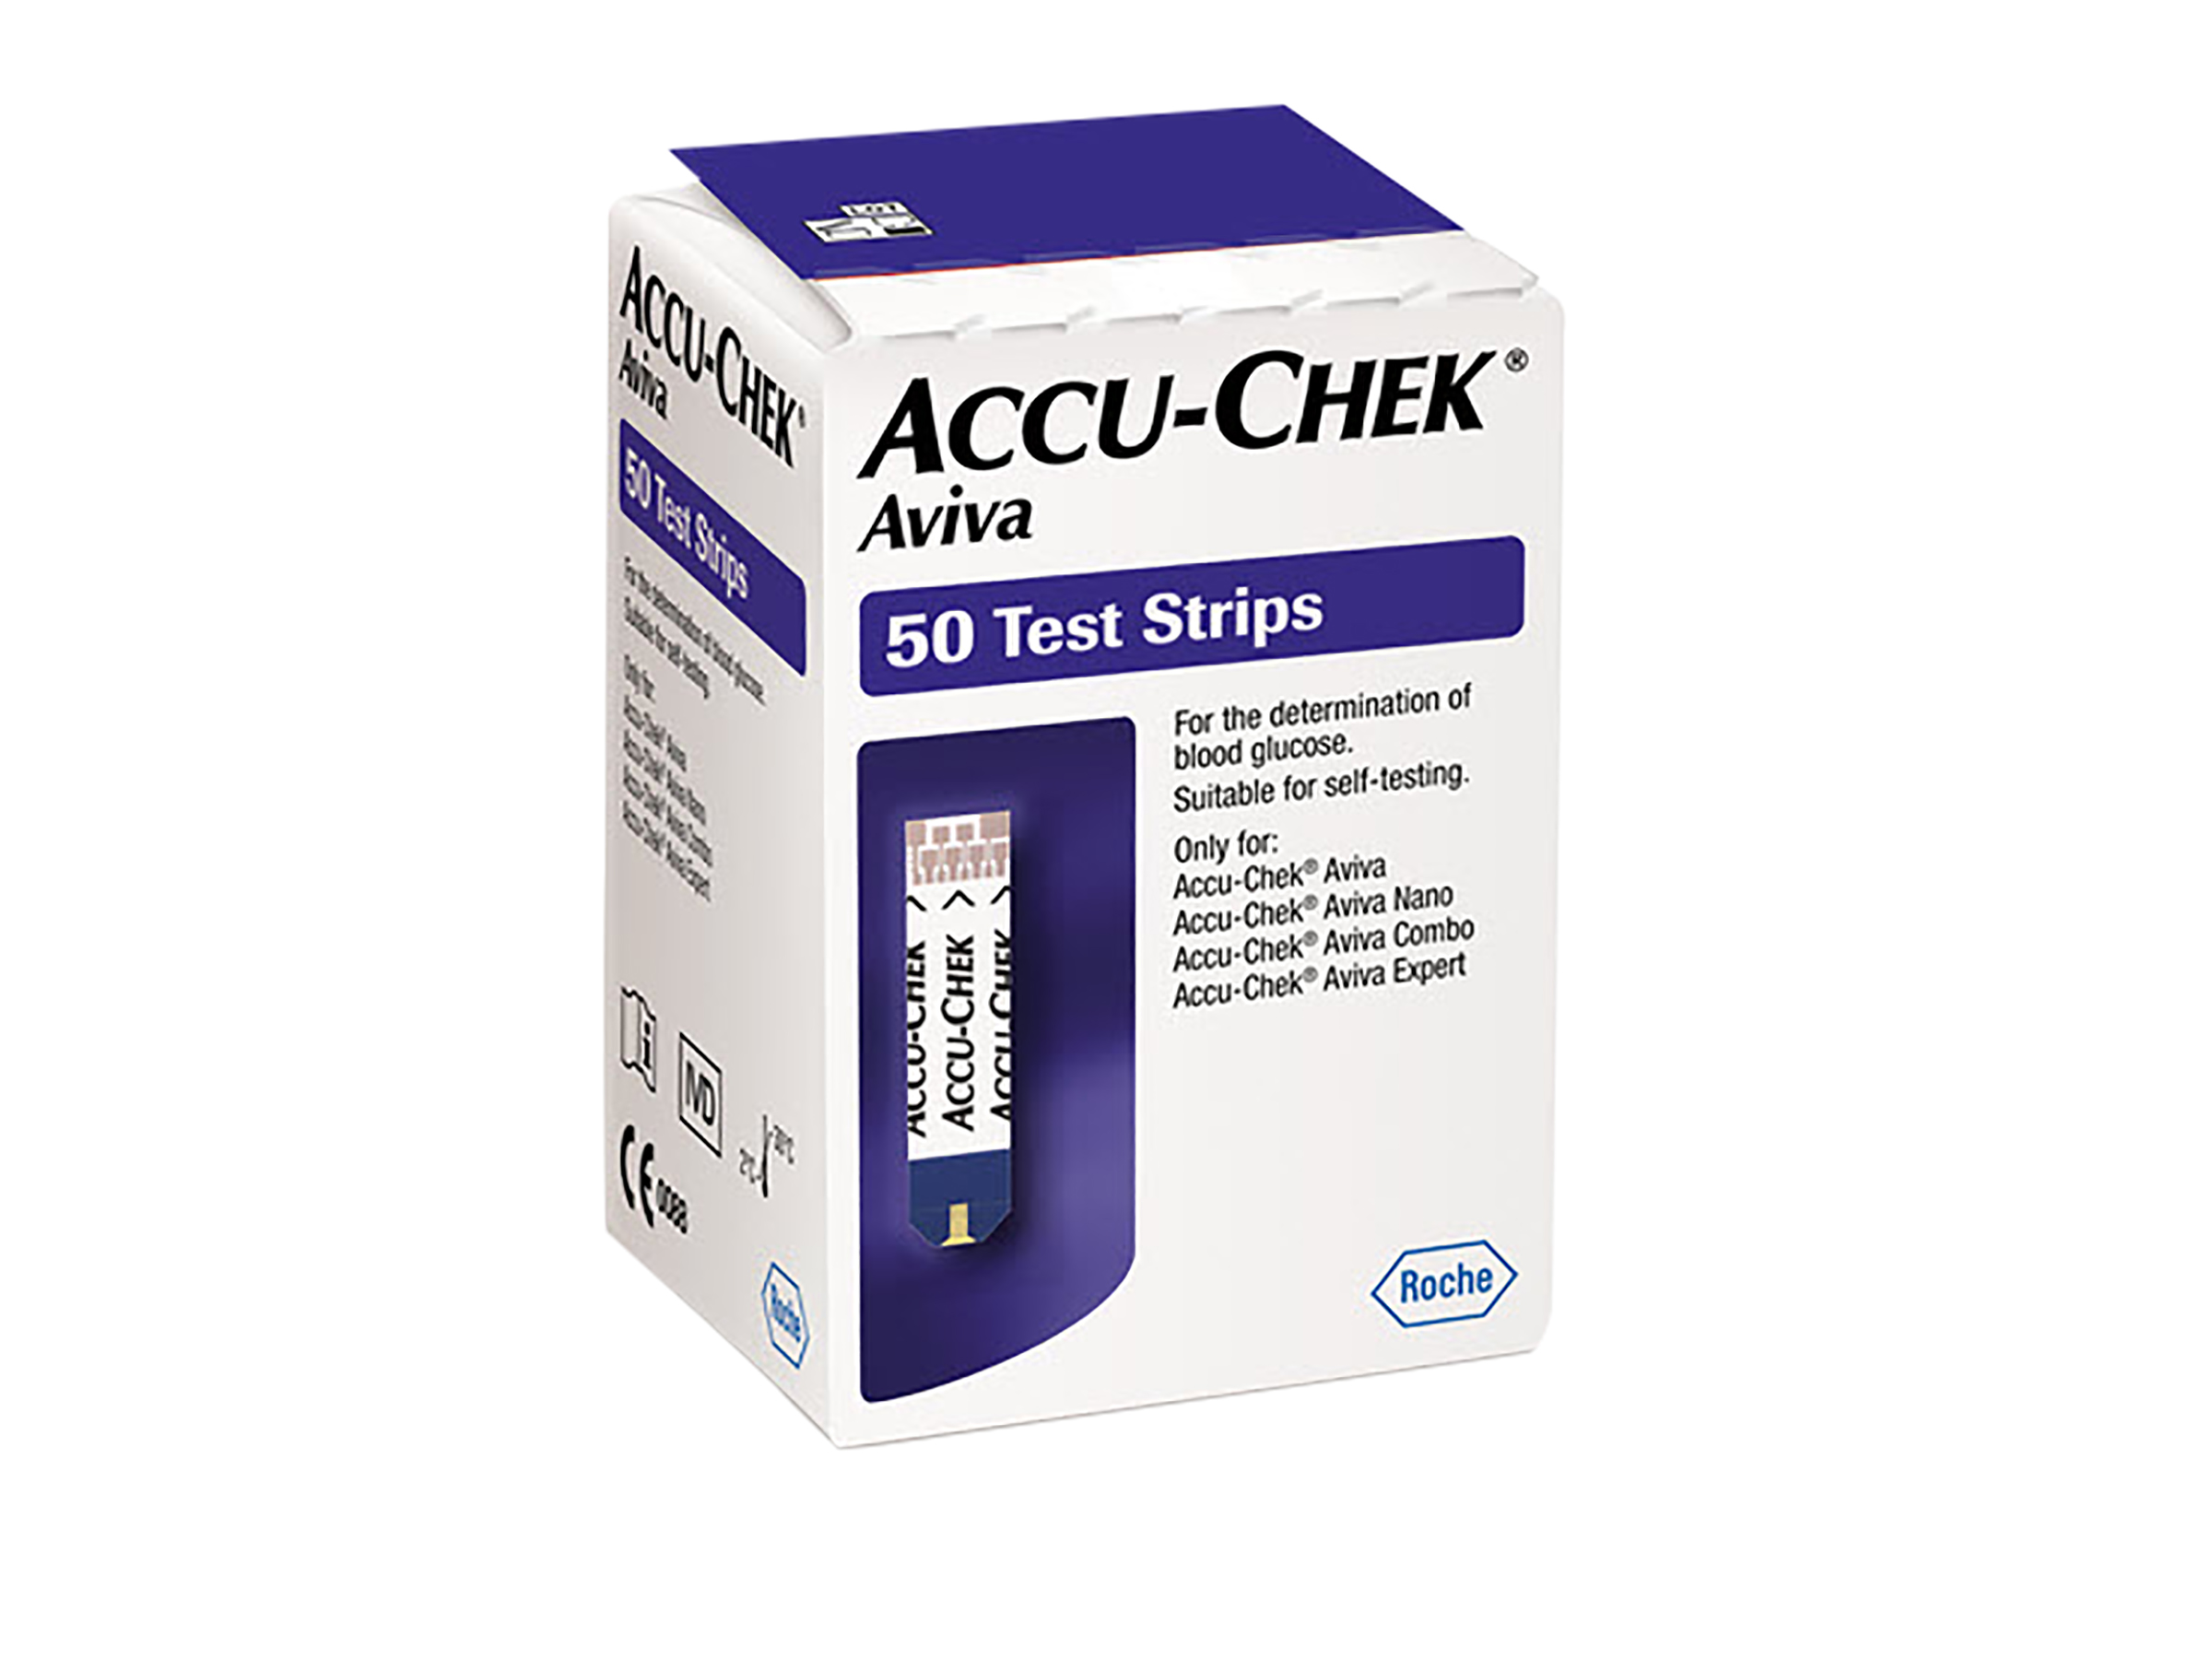 Accu-Chek Aviva glukose teststrips, 50 stk